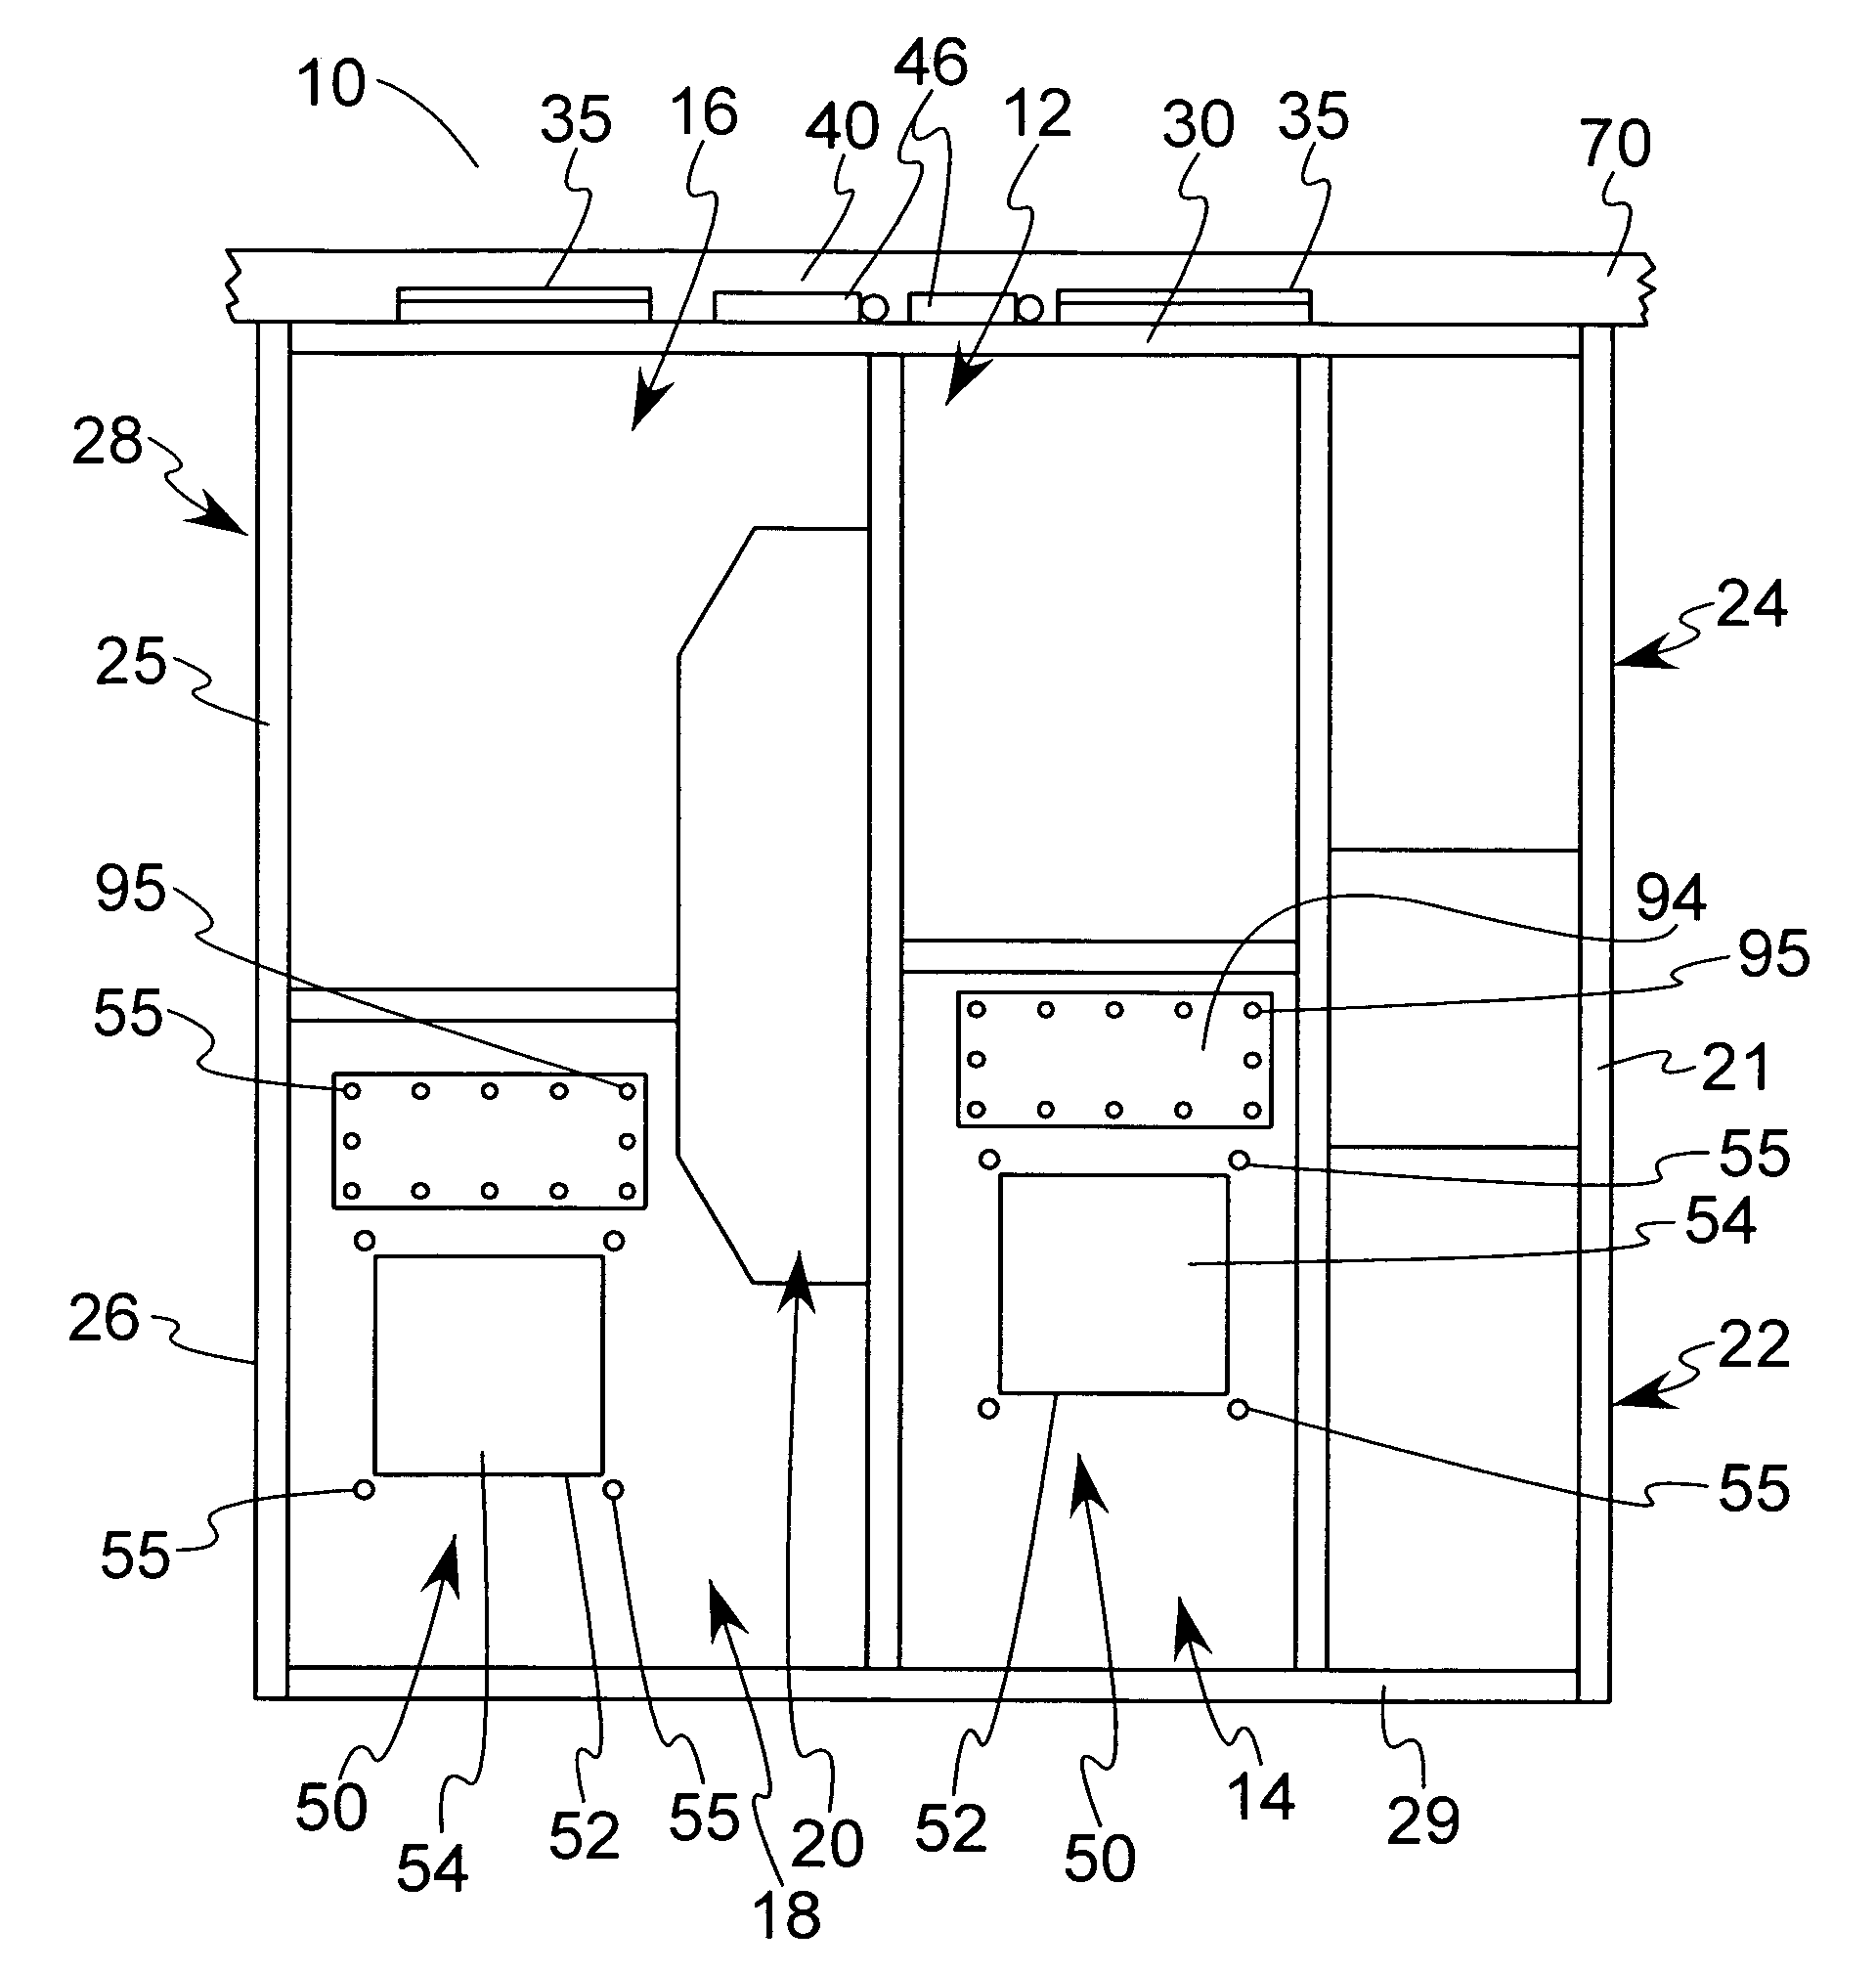 Arc resistant switchgear having dedicated vertical plenums